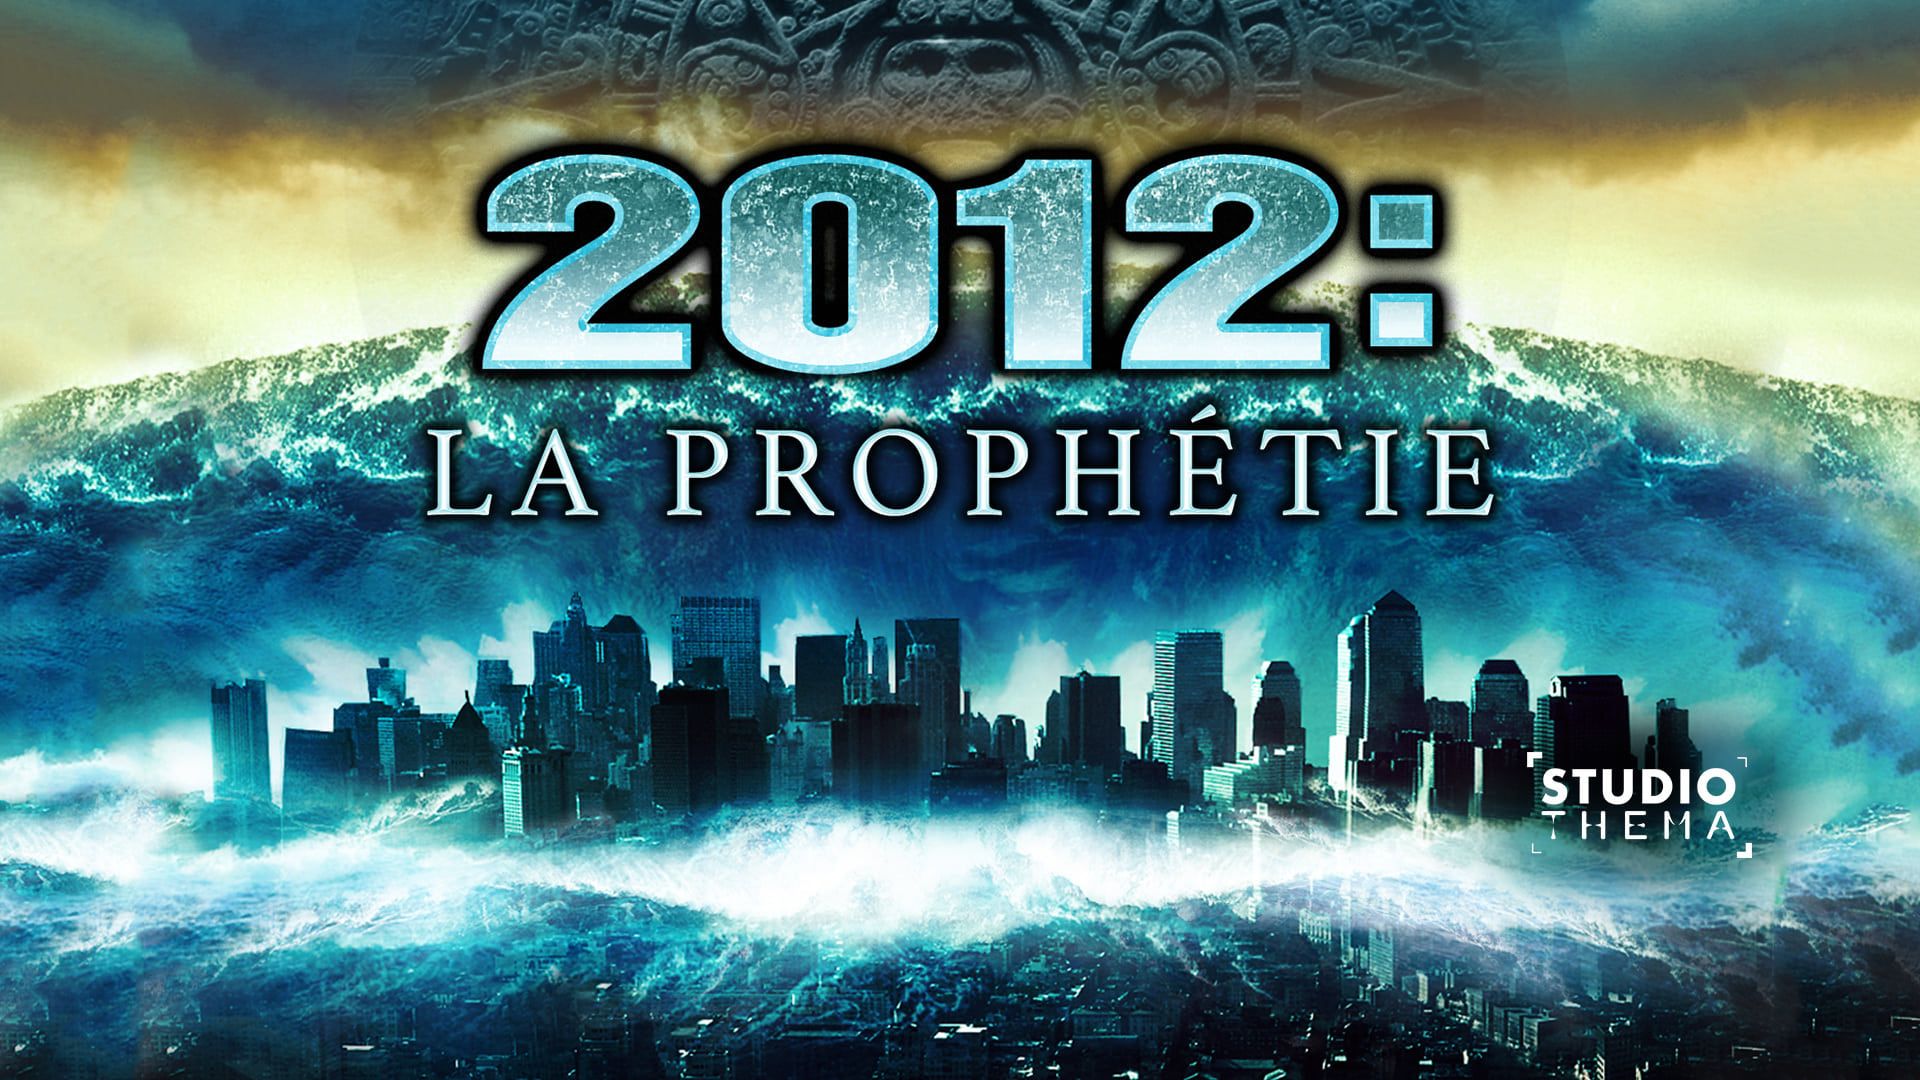 2012 Doomsday background